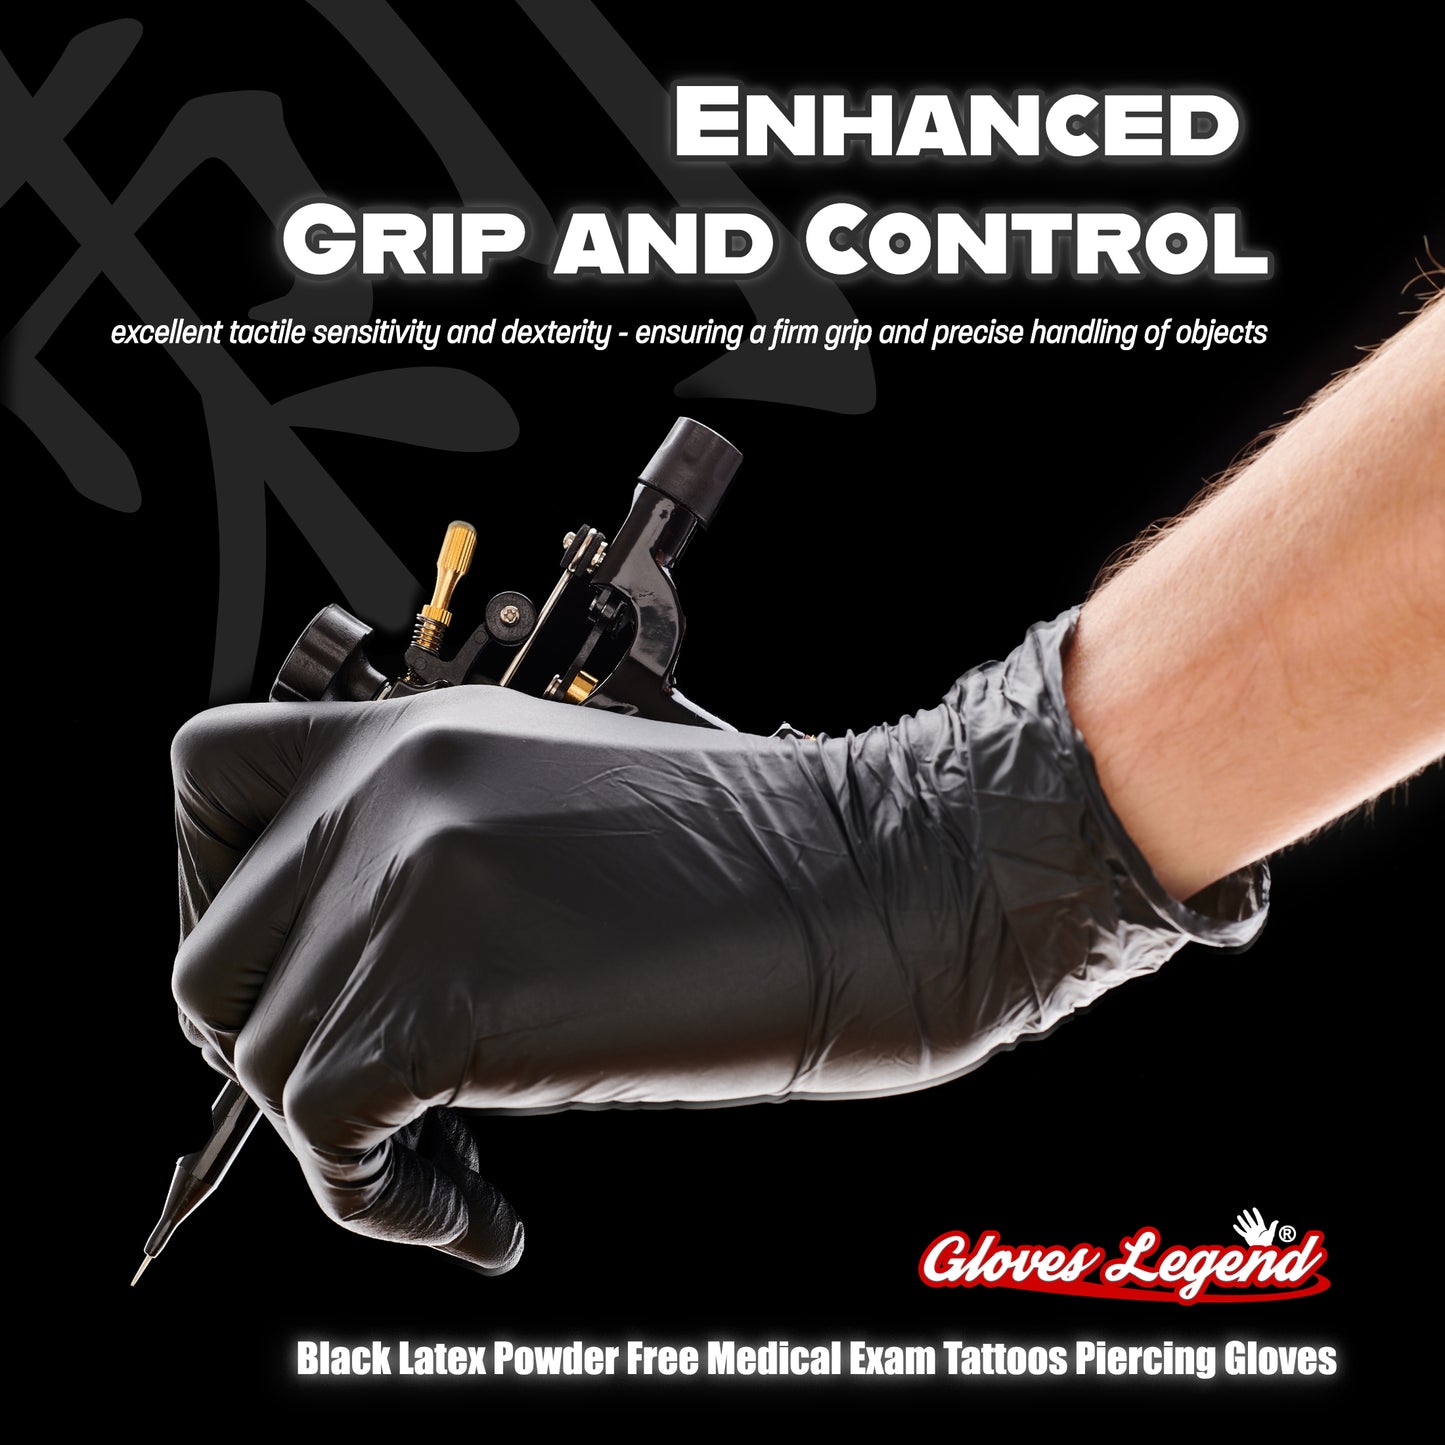 One Box (100 Gloves) Size Medium - Black Latex Powder Free Medical Exam Tattoos Piercing Gloves